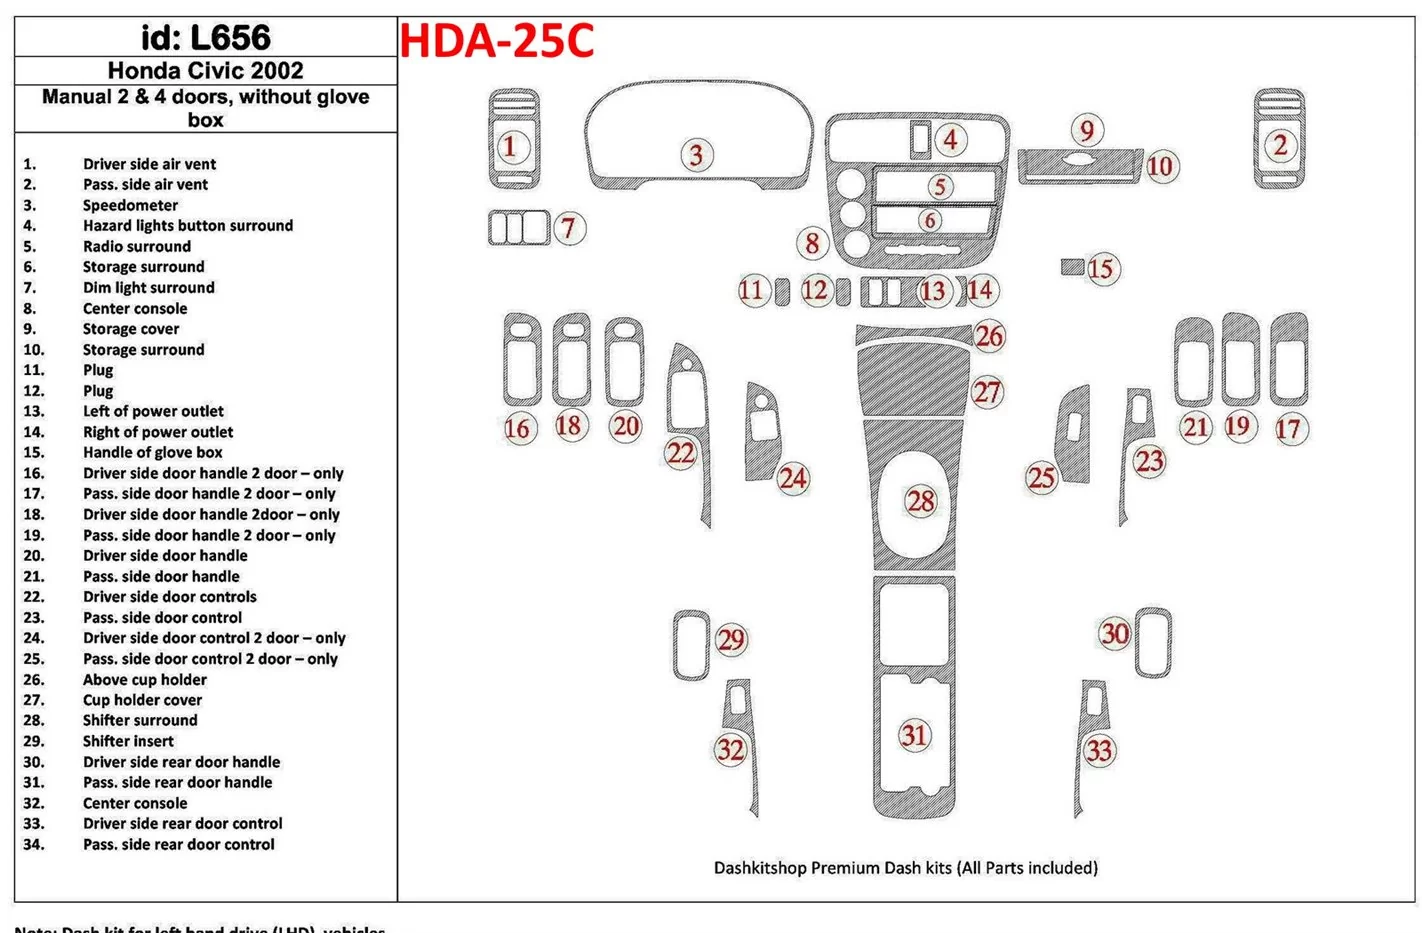 Honda Civic 2002-2002 Manual Gearbox, 2 or 4 Doors, Without glowe-box, 34 Parts set Interior BD Dash Trim Kit